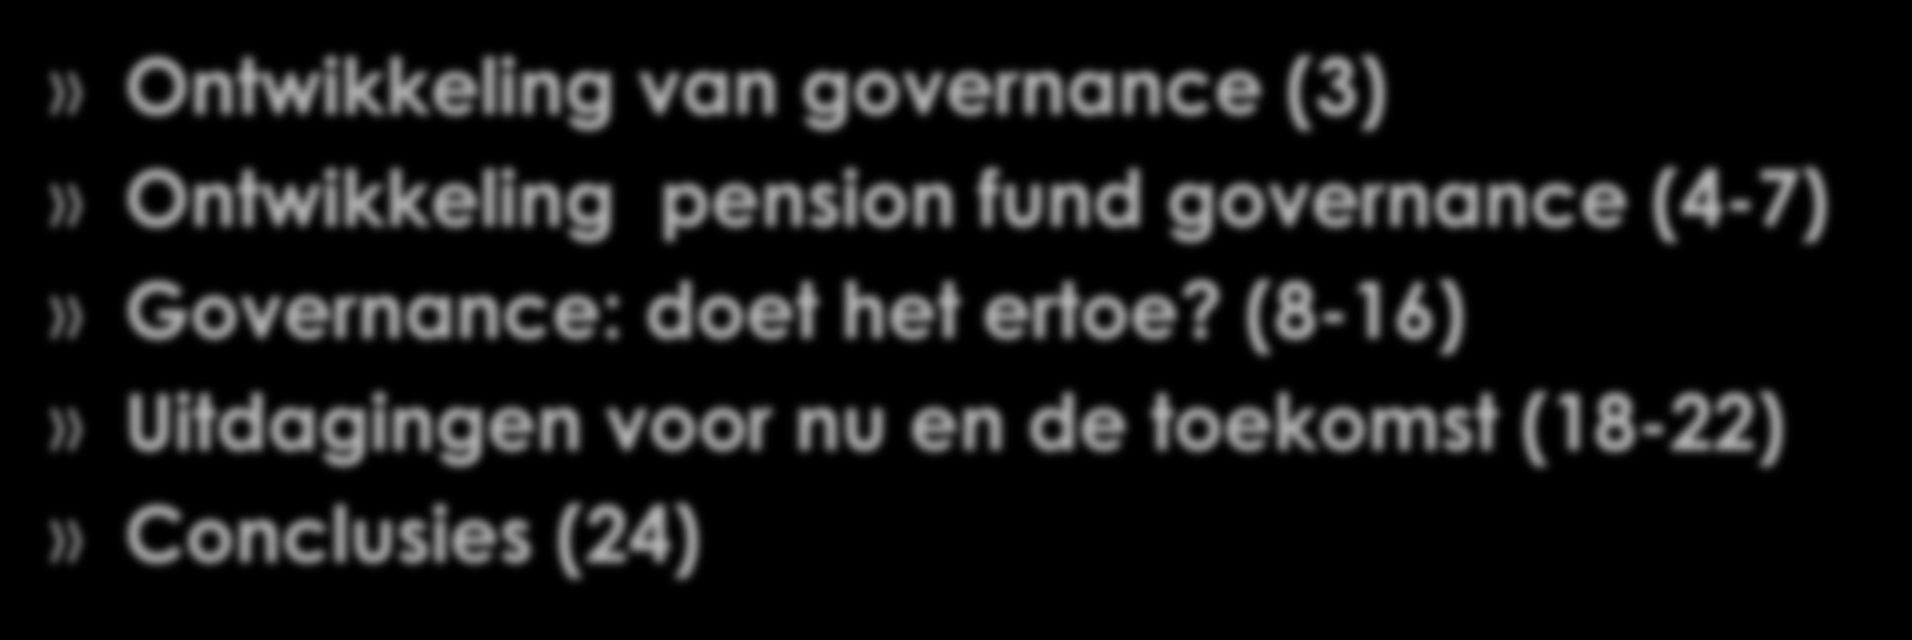 » Ontwikkeling van governance (3)» Ontwikkeling pension fund governance (4-7)»